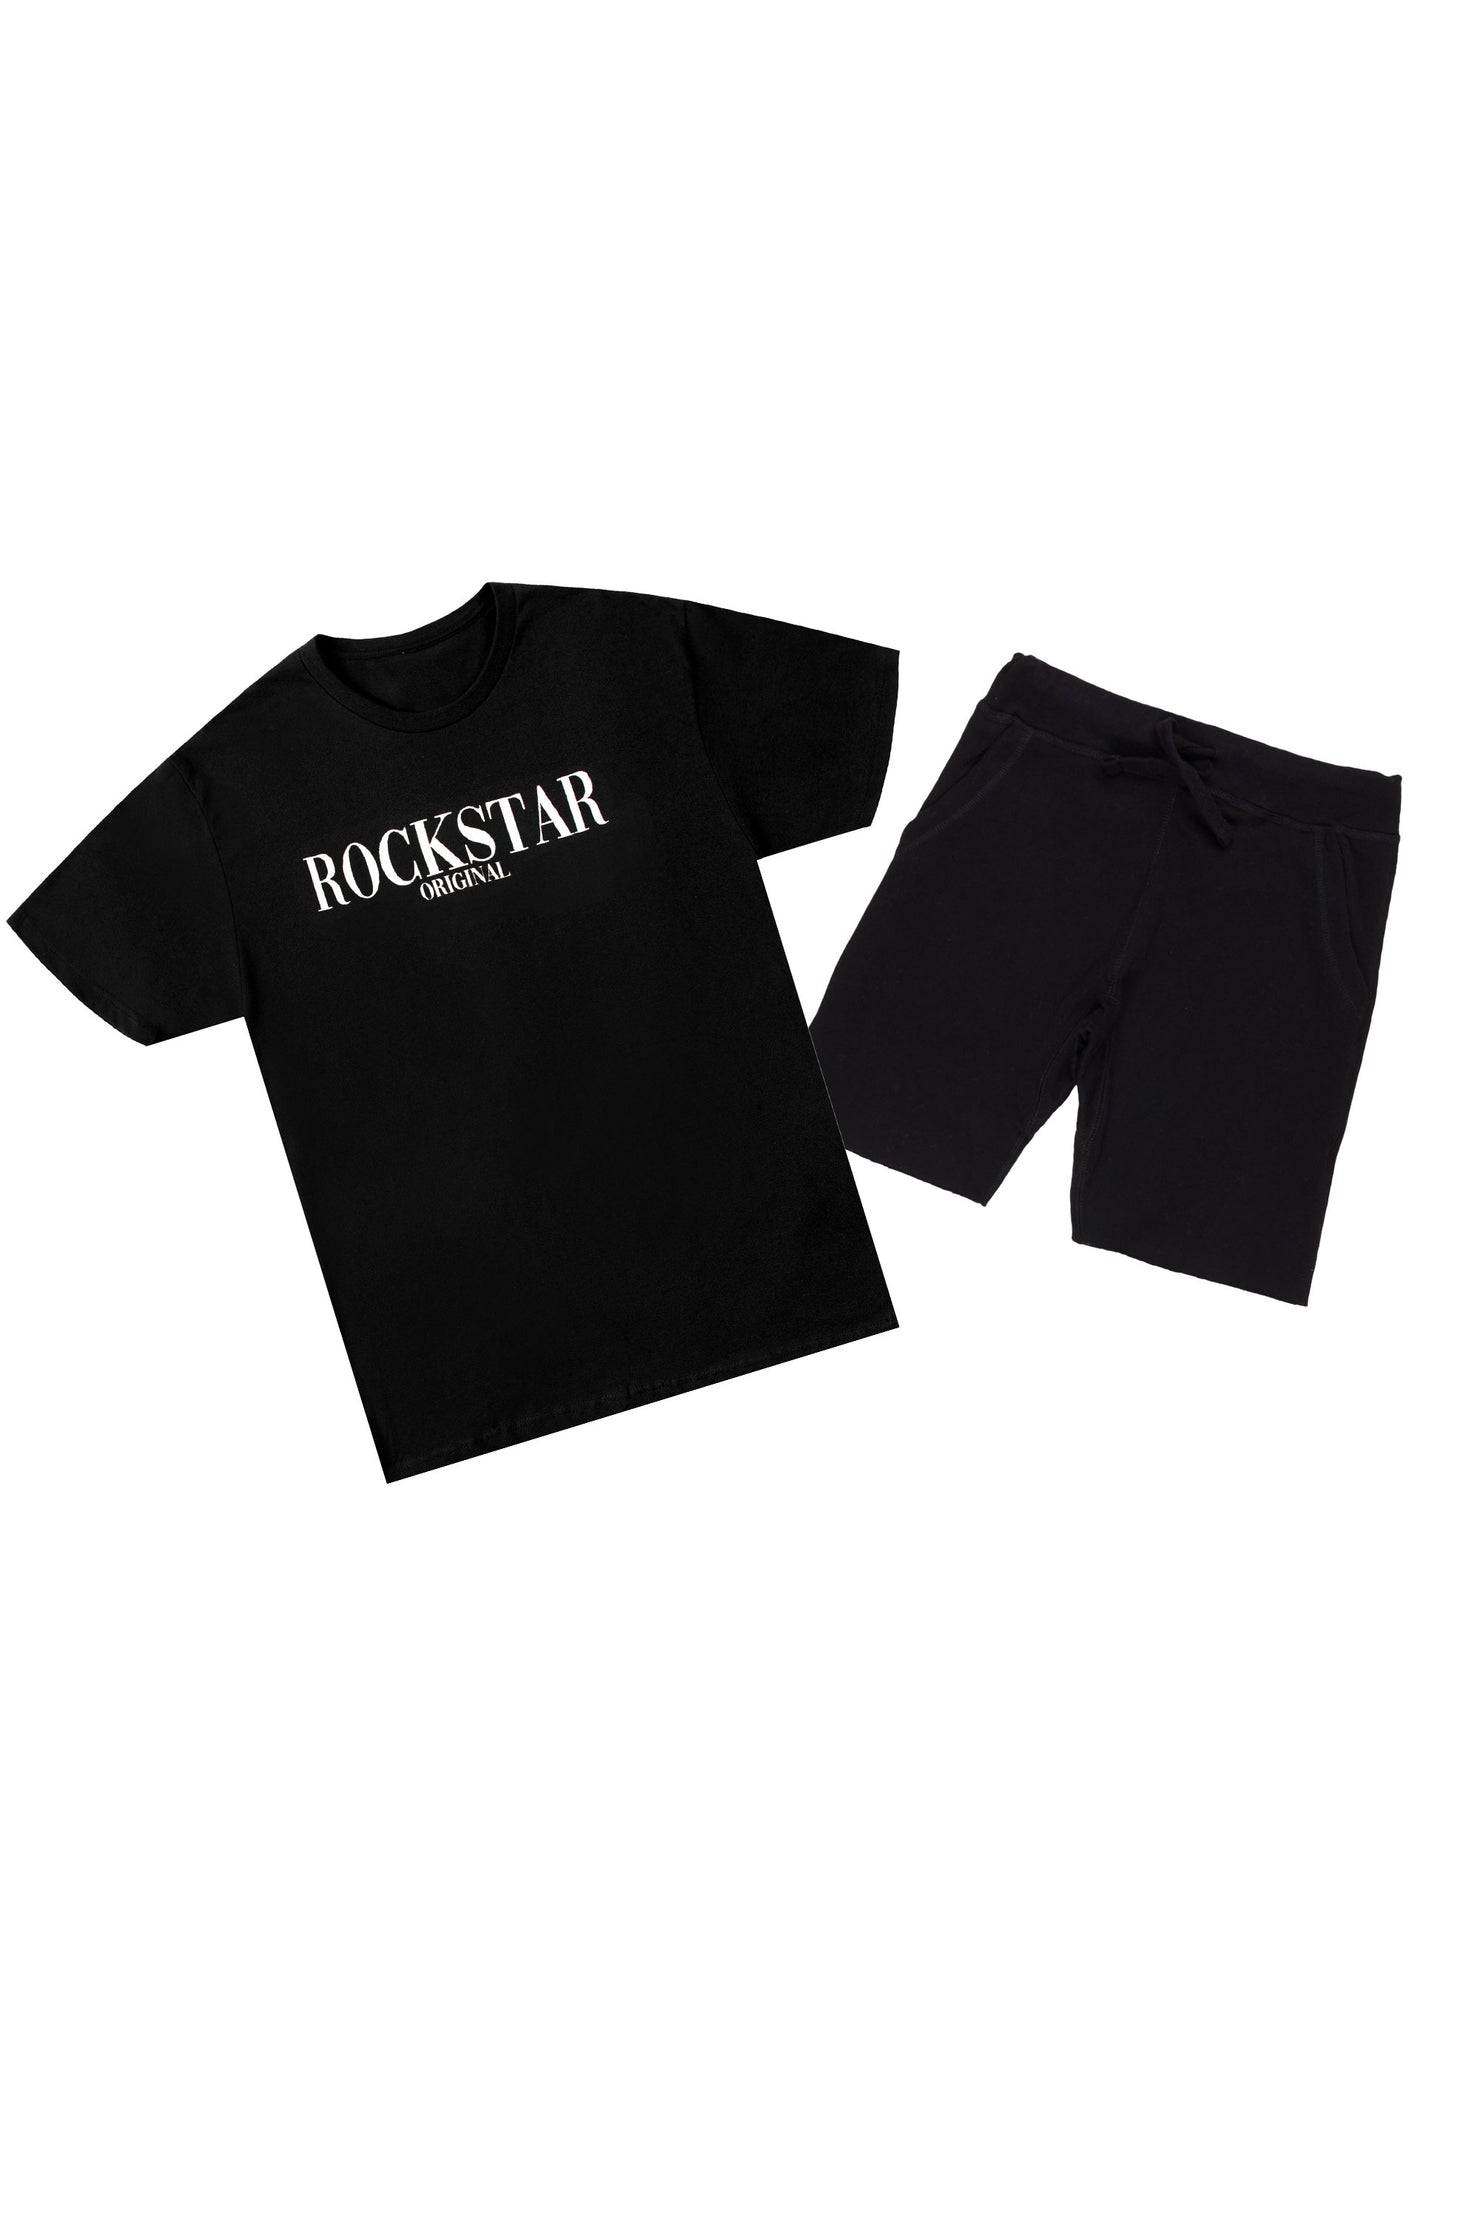 Octavio Black/White Basic T-Shirt Short Set